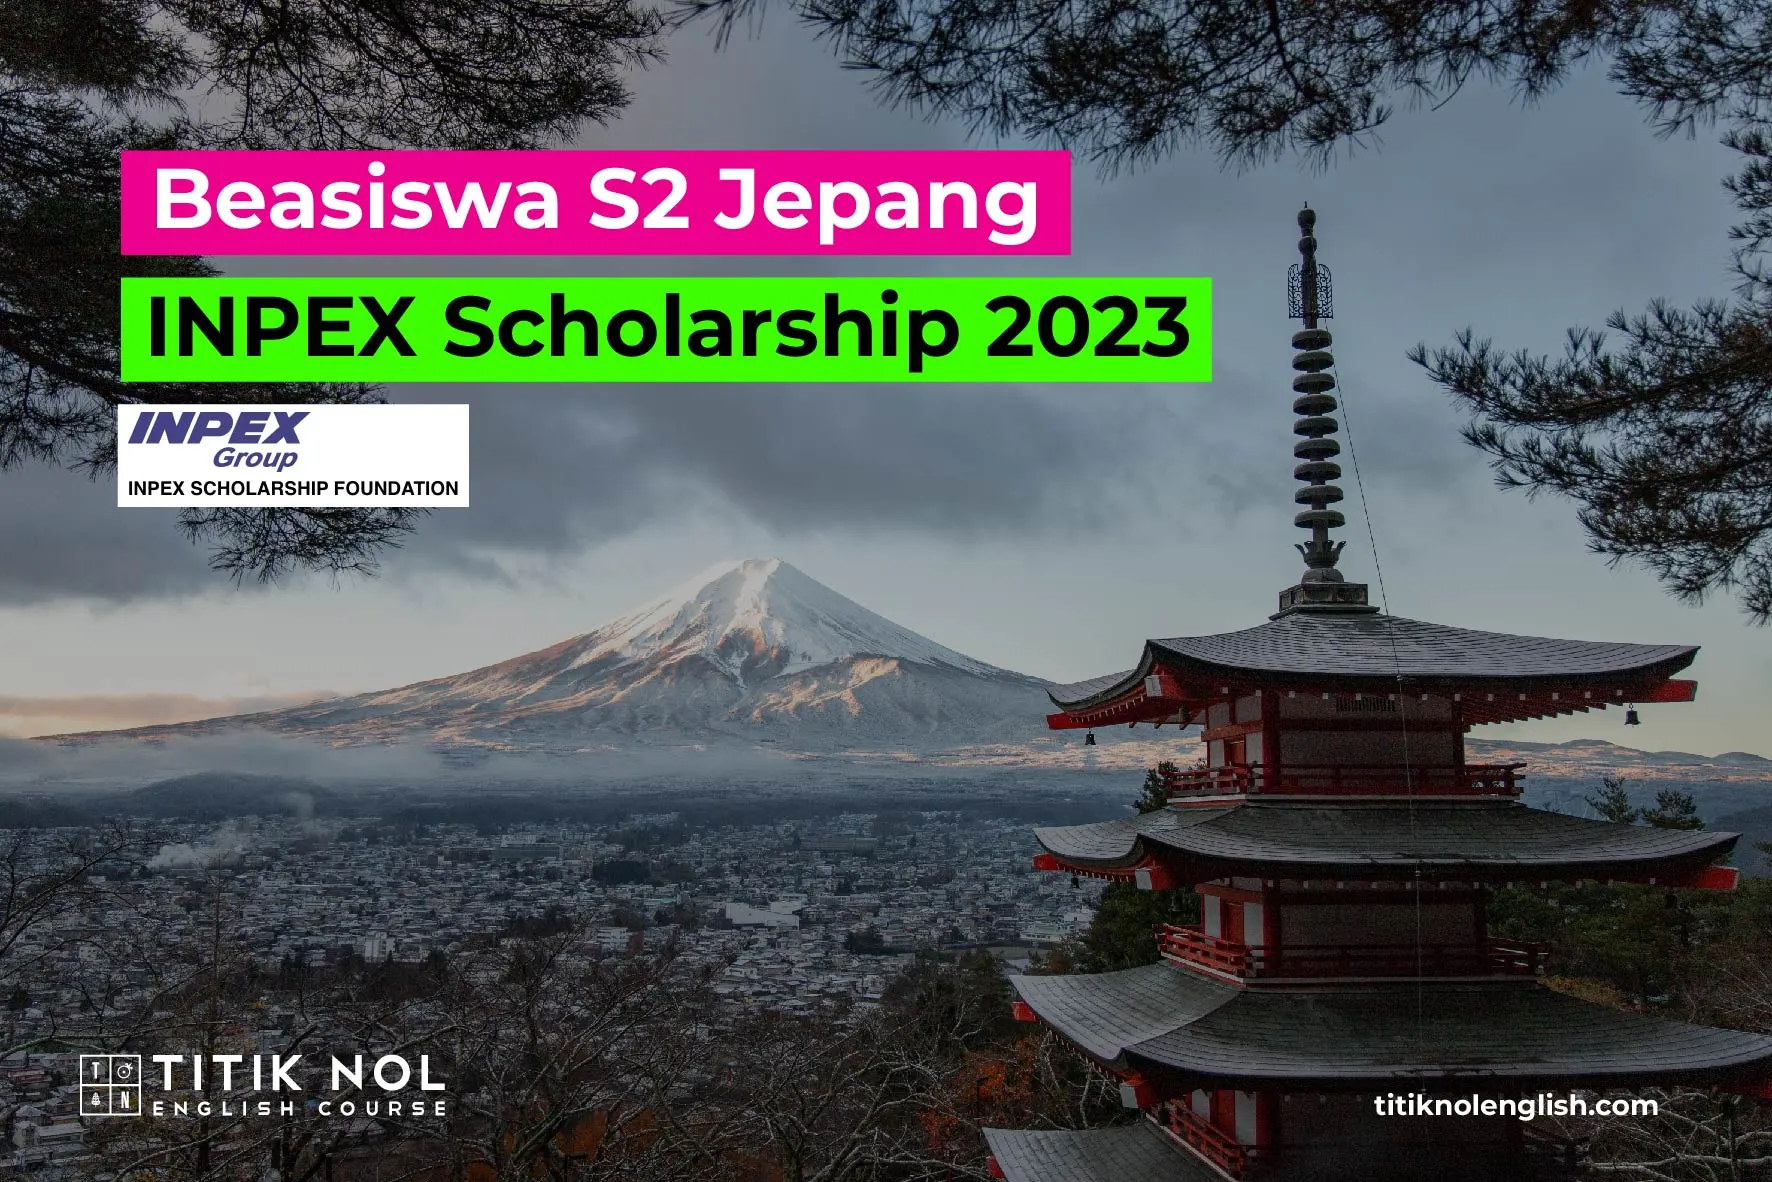 Beasiswa-S2-Jepang-Inpex-Scholarship-2023-01